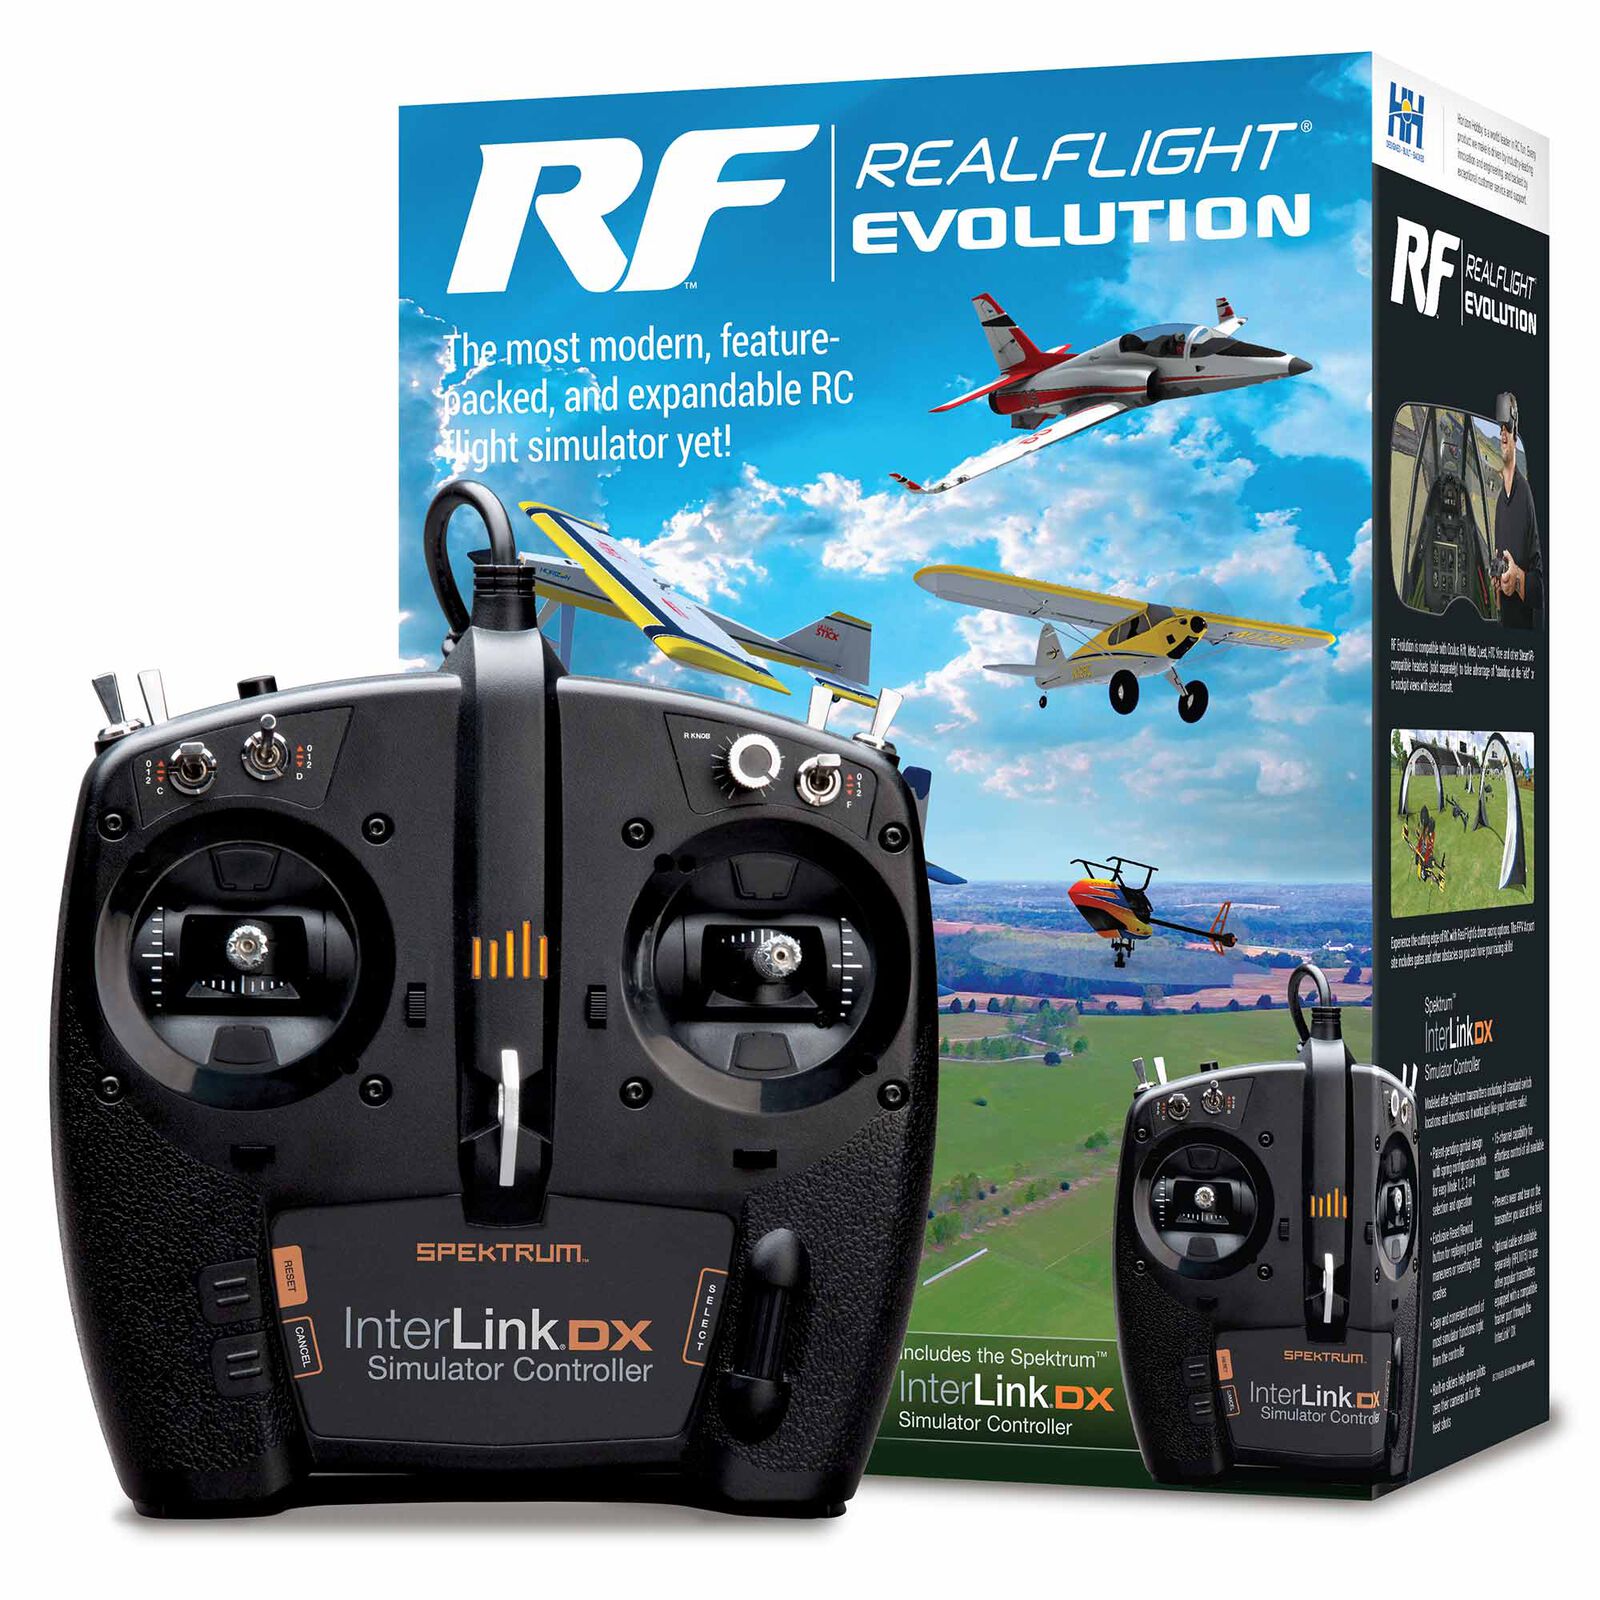 RealFlight RFL2000 - RealFlight Evolution RC Flight Simulator with InterLink DX Controller